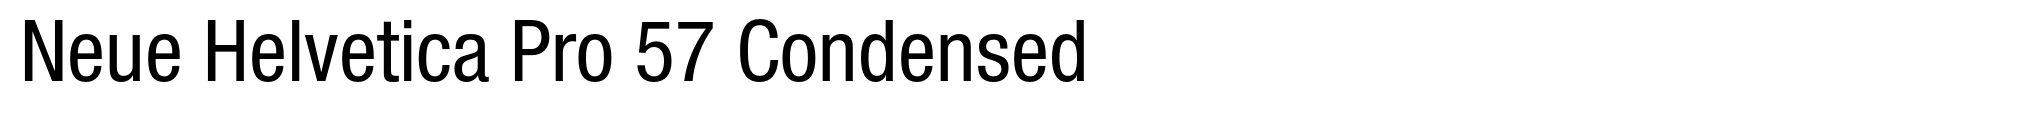 Neue Helvetica Pro 57 Condensed image